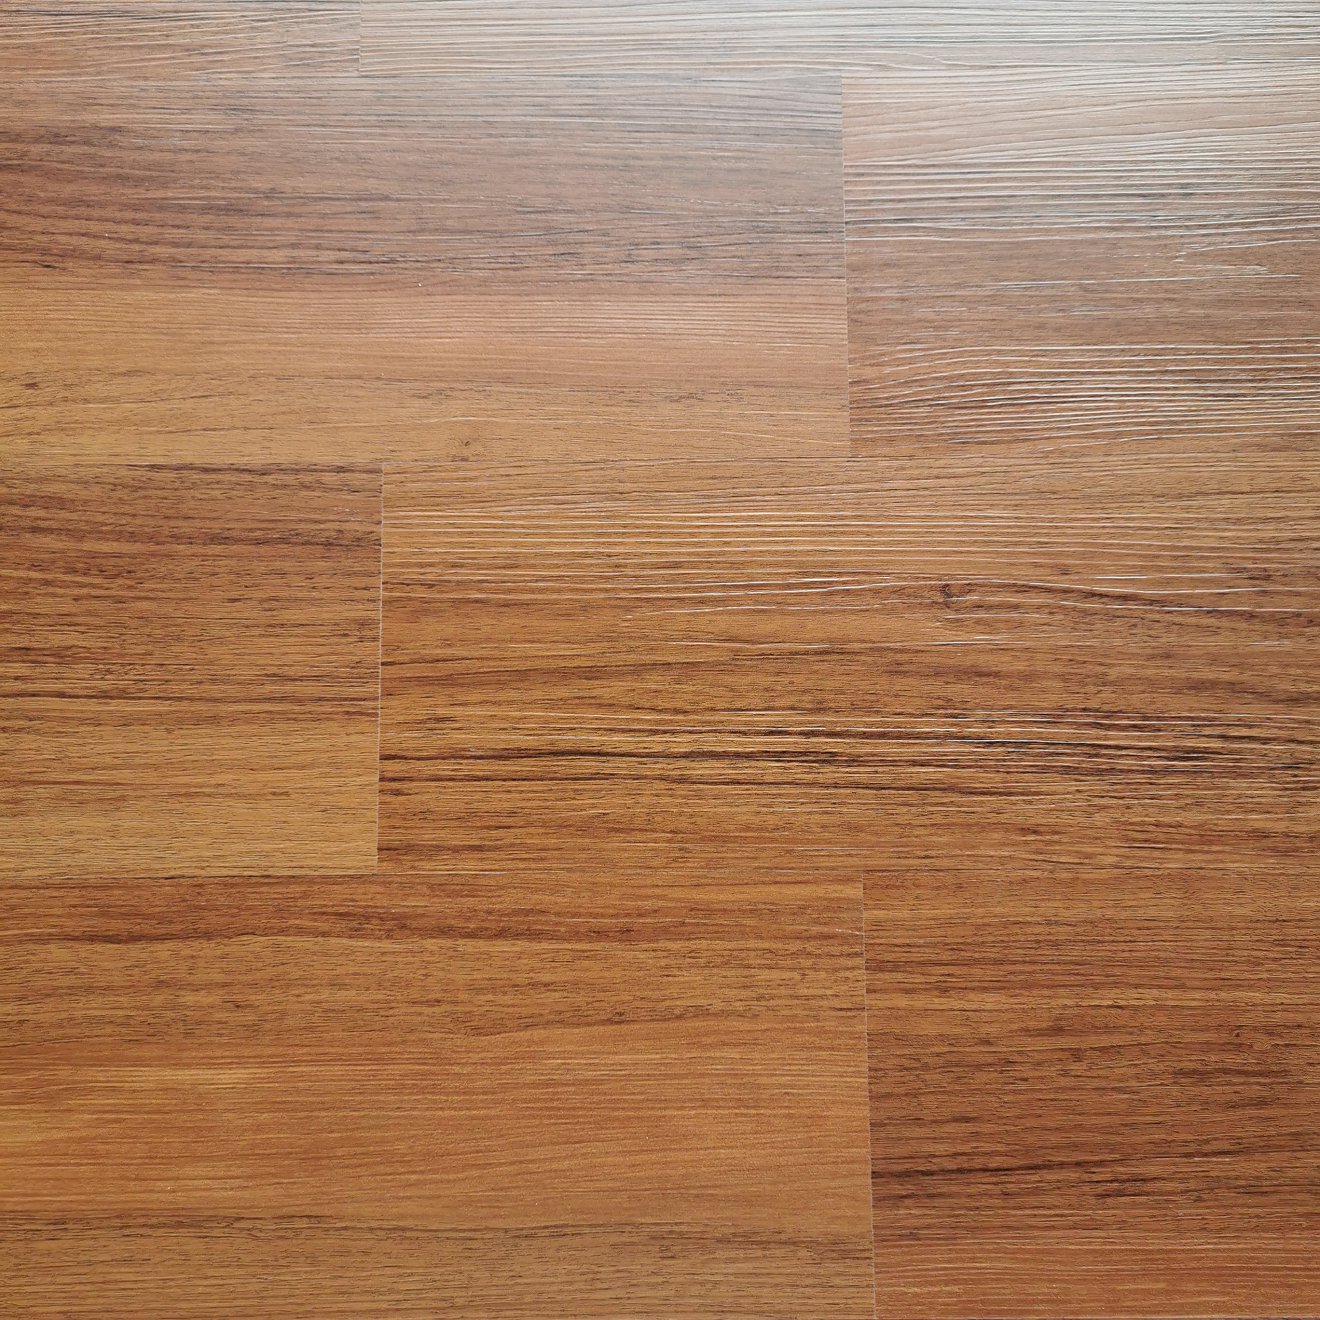 Kangton China Lvt Flooring Use In, Hardwood Flooring Manufacturers Reviews